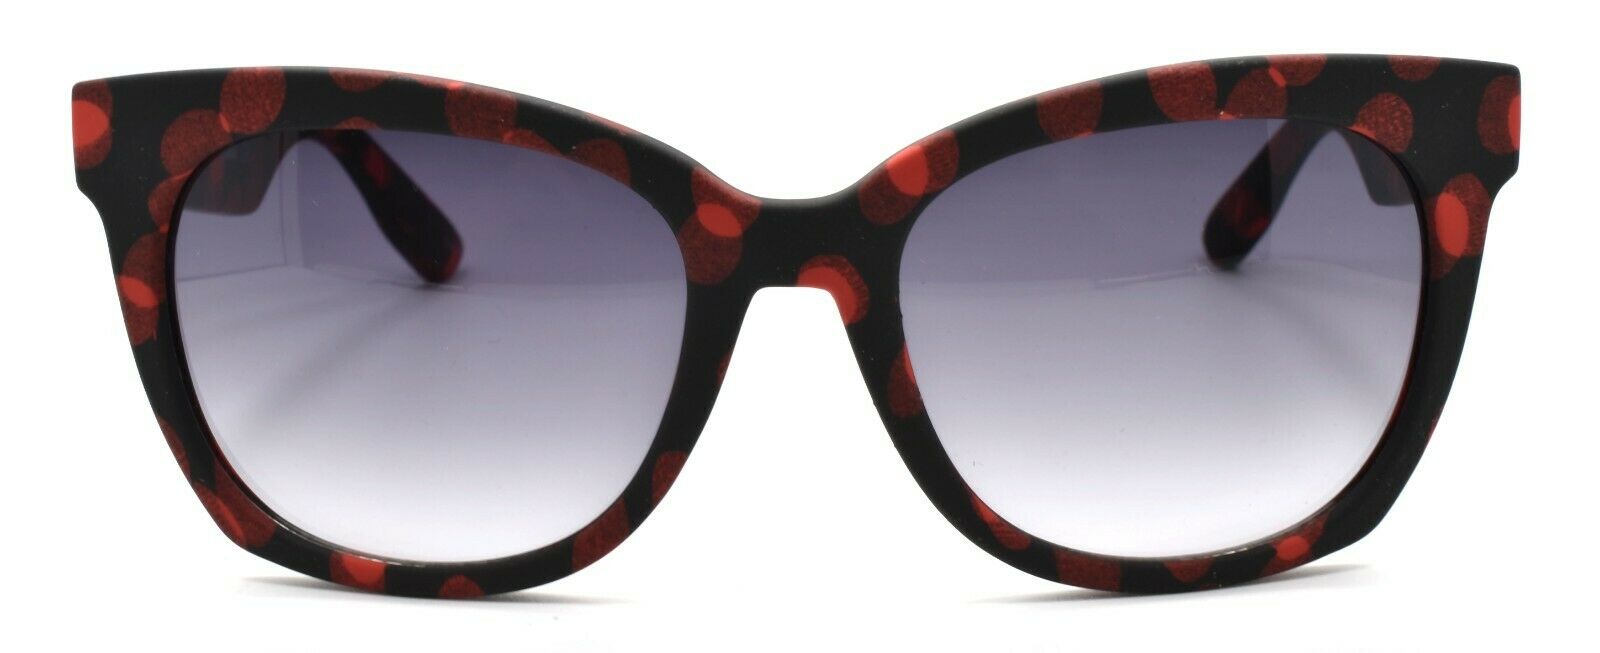 2-McQ Alexander McQueen MQ0011S 008 Women's Sunglasses Red & Black / Gray Gradient-889652010861-IKSpecs